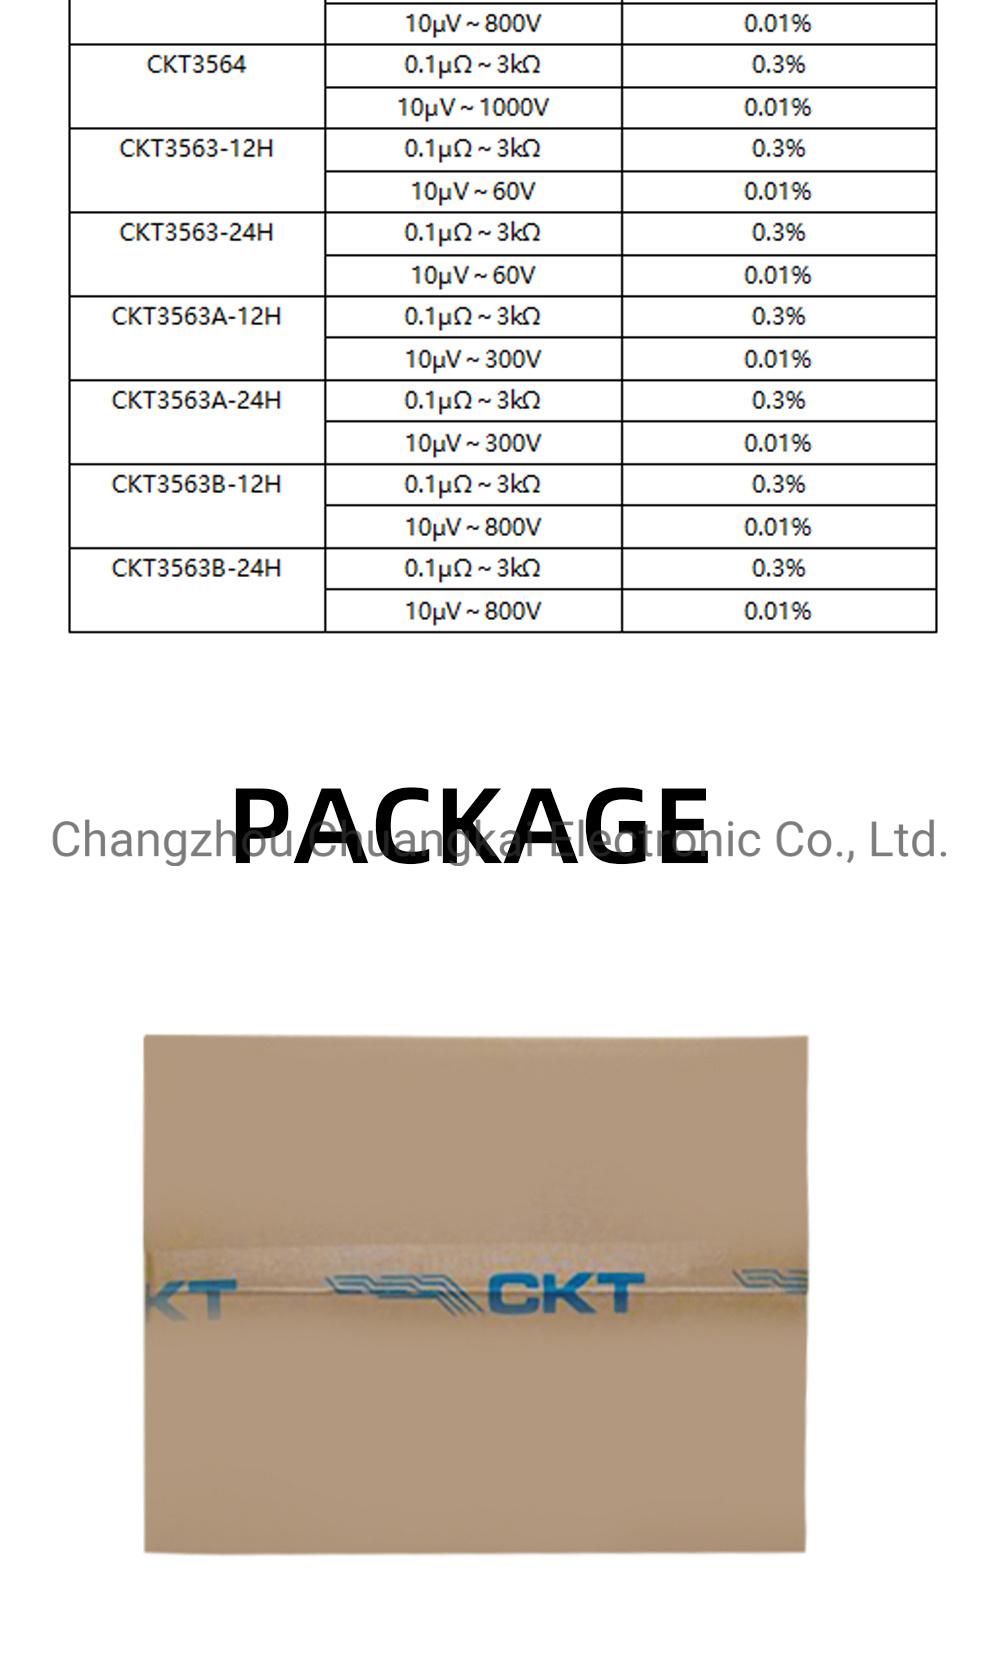 Battery Internal Resistance Meter Battery Test Equipment Tester (Model CKT3563)